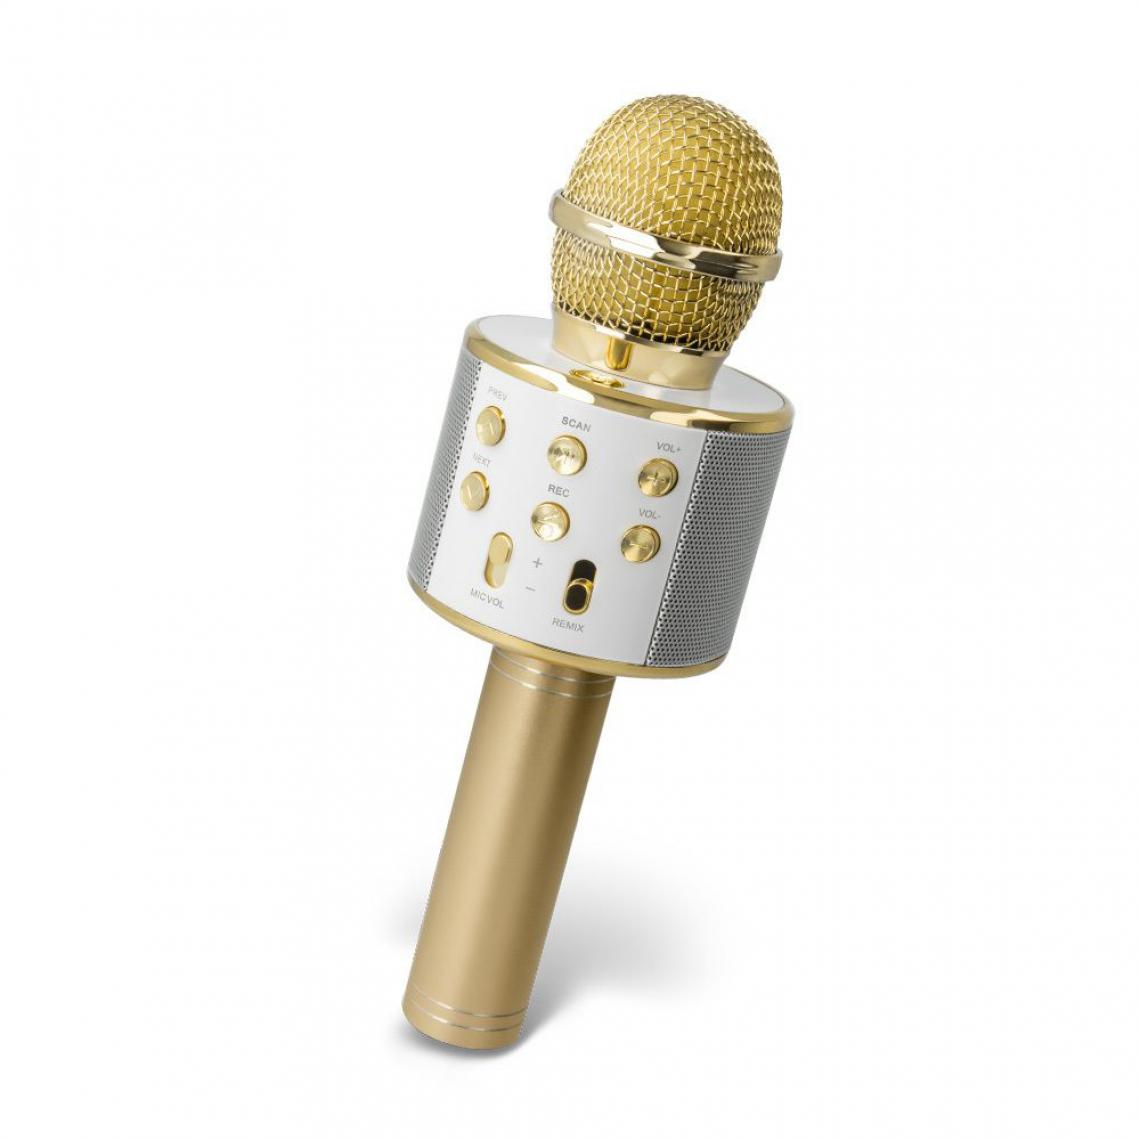 Ozzzo - Microphone Karaoke bluetooth haut parleur ozzzo Gold Or pour Apple iPad mini 3 - Autres accessoires smartphone